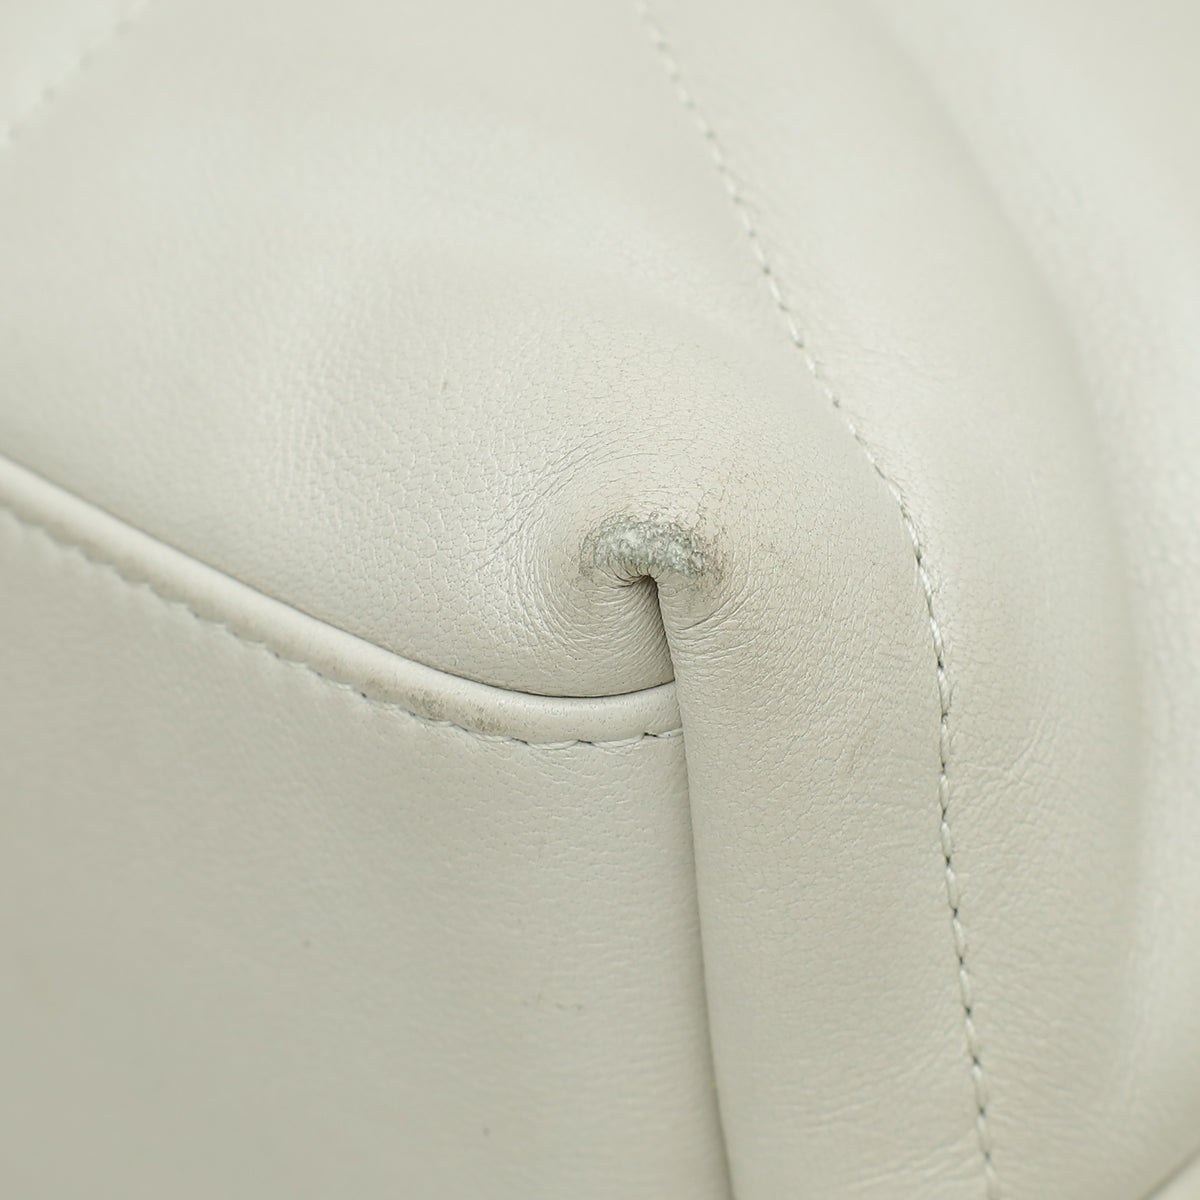 YSL Blanc Vintage Loulou Puffer Small Shoulder Bag